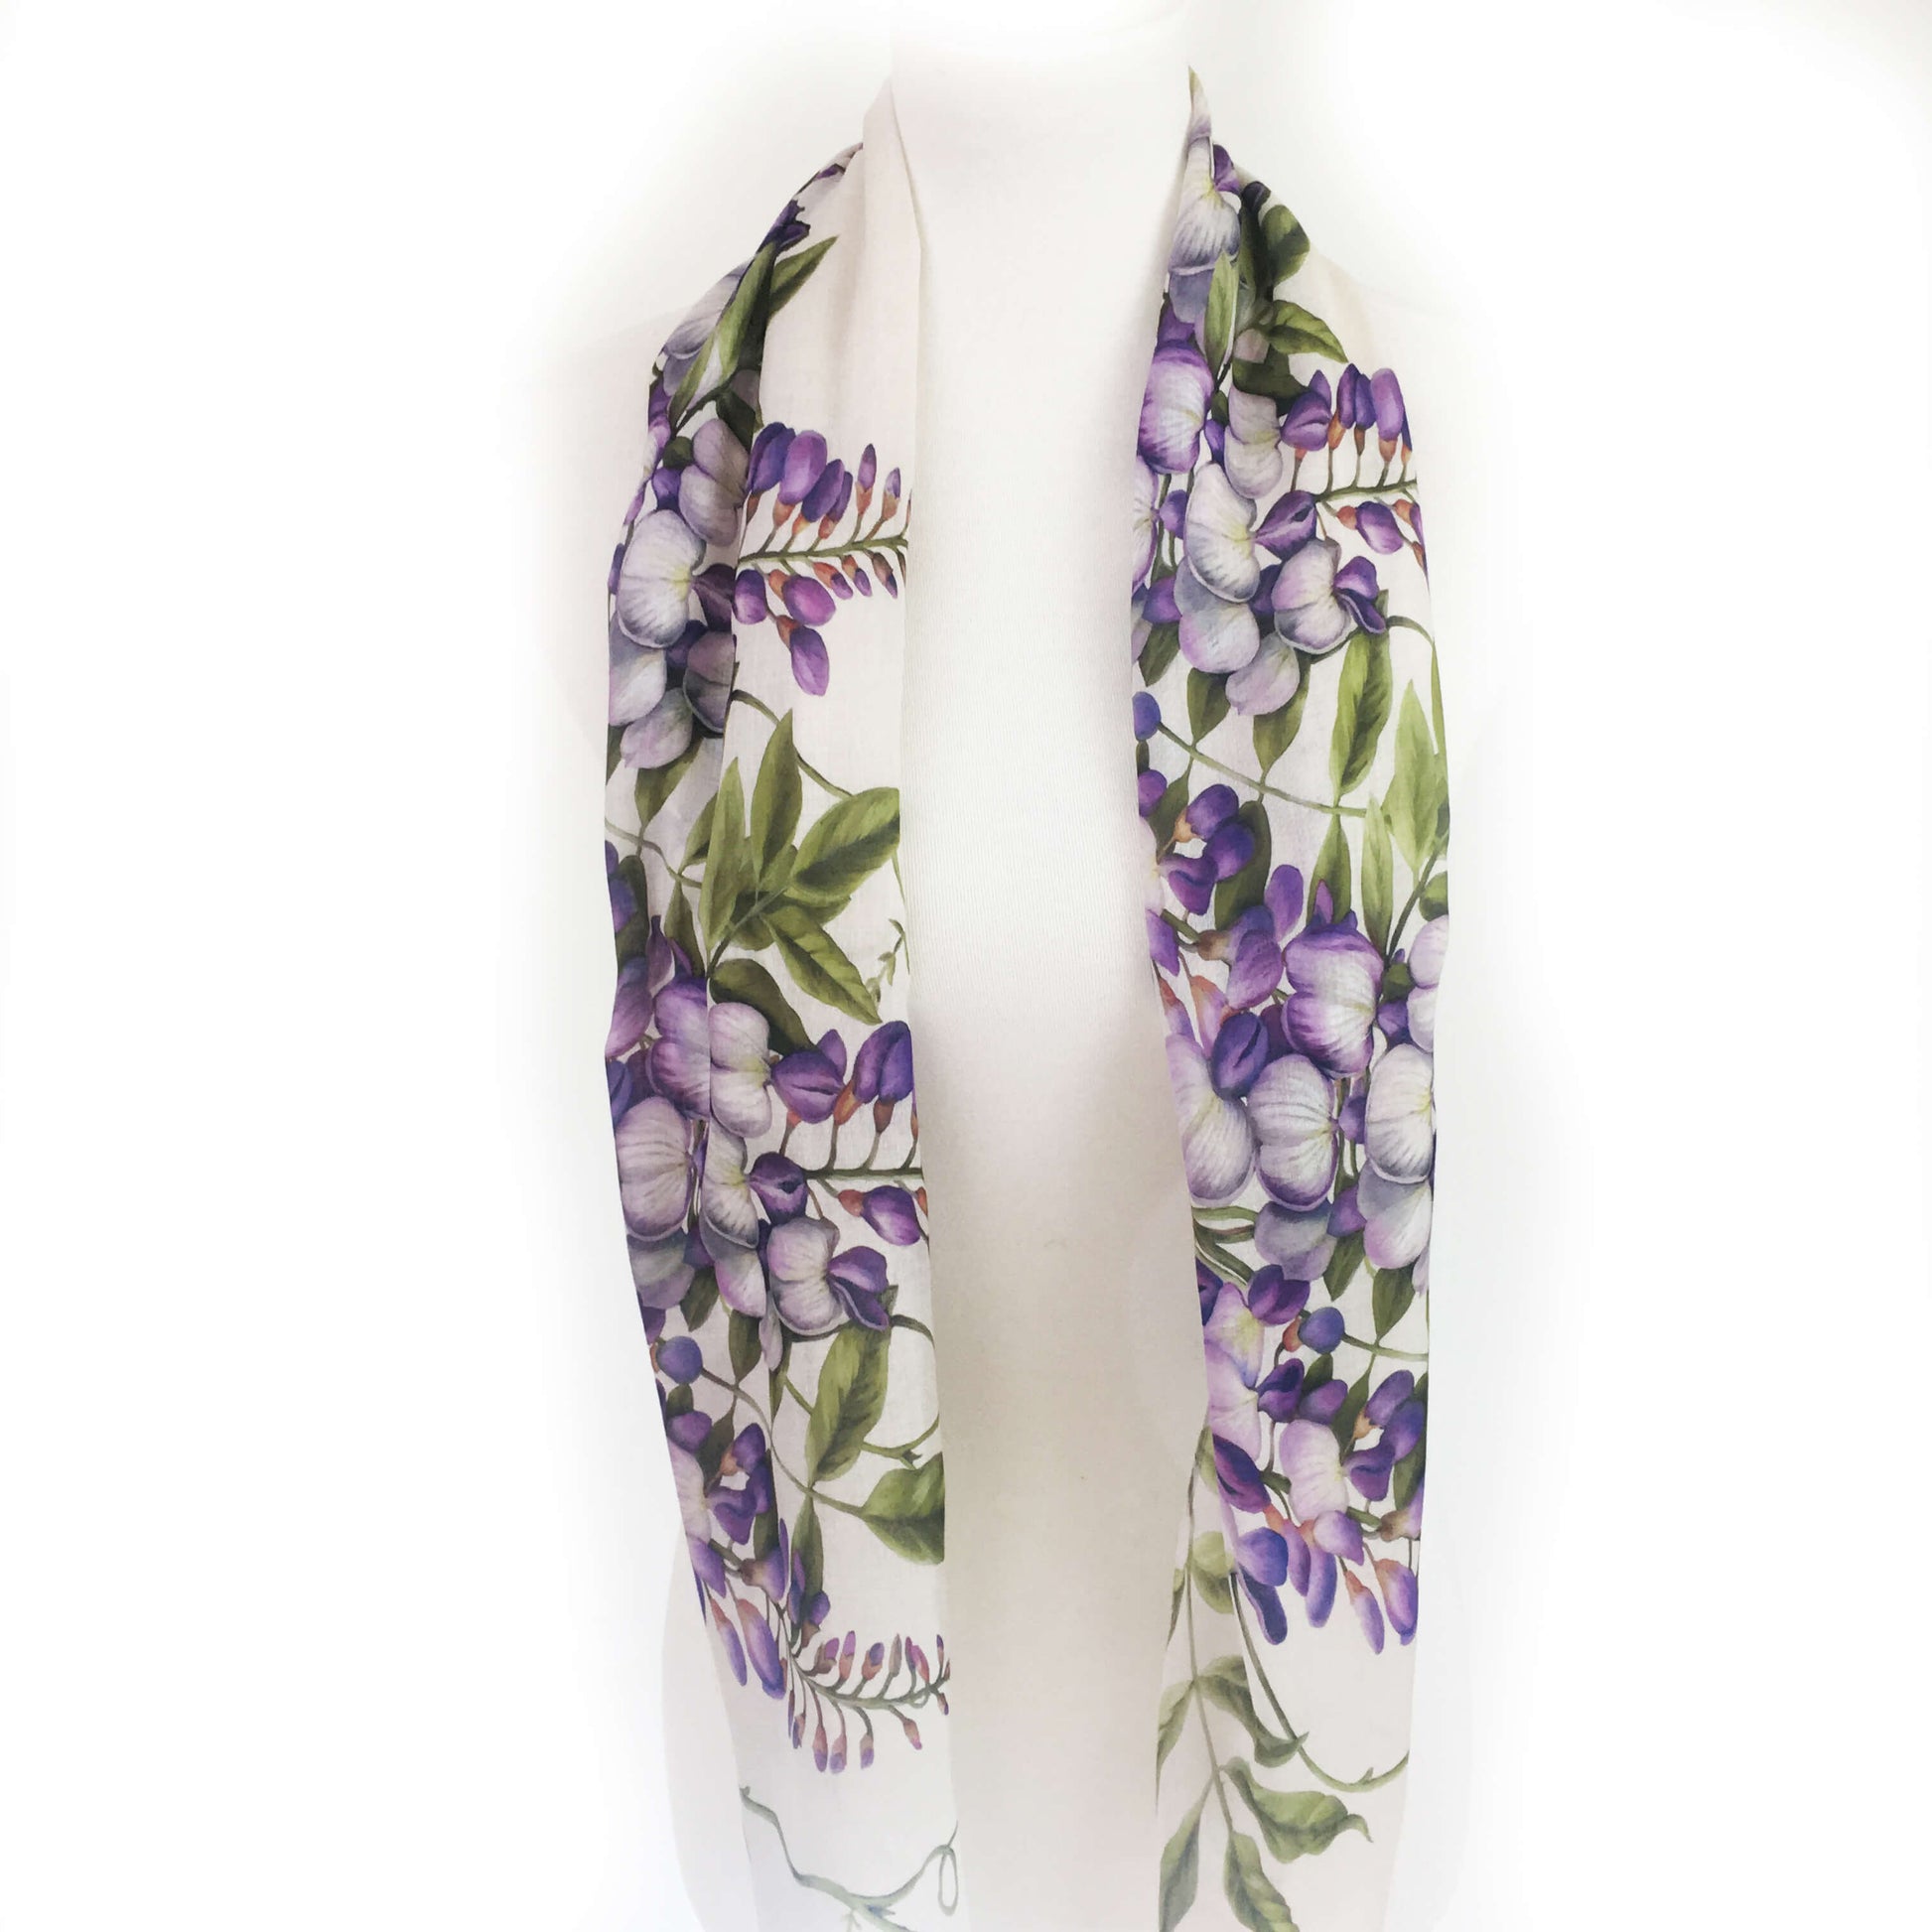 Divine Vines on white floral scarf - natural linen look - UndertheLeafDesigns.com